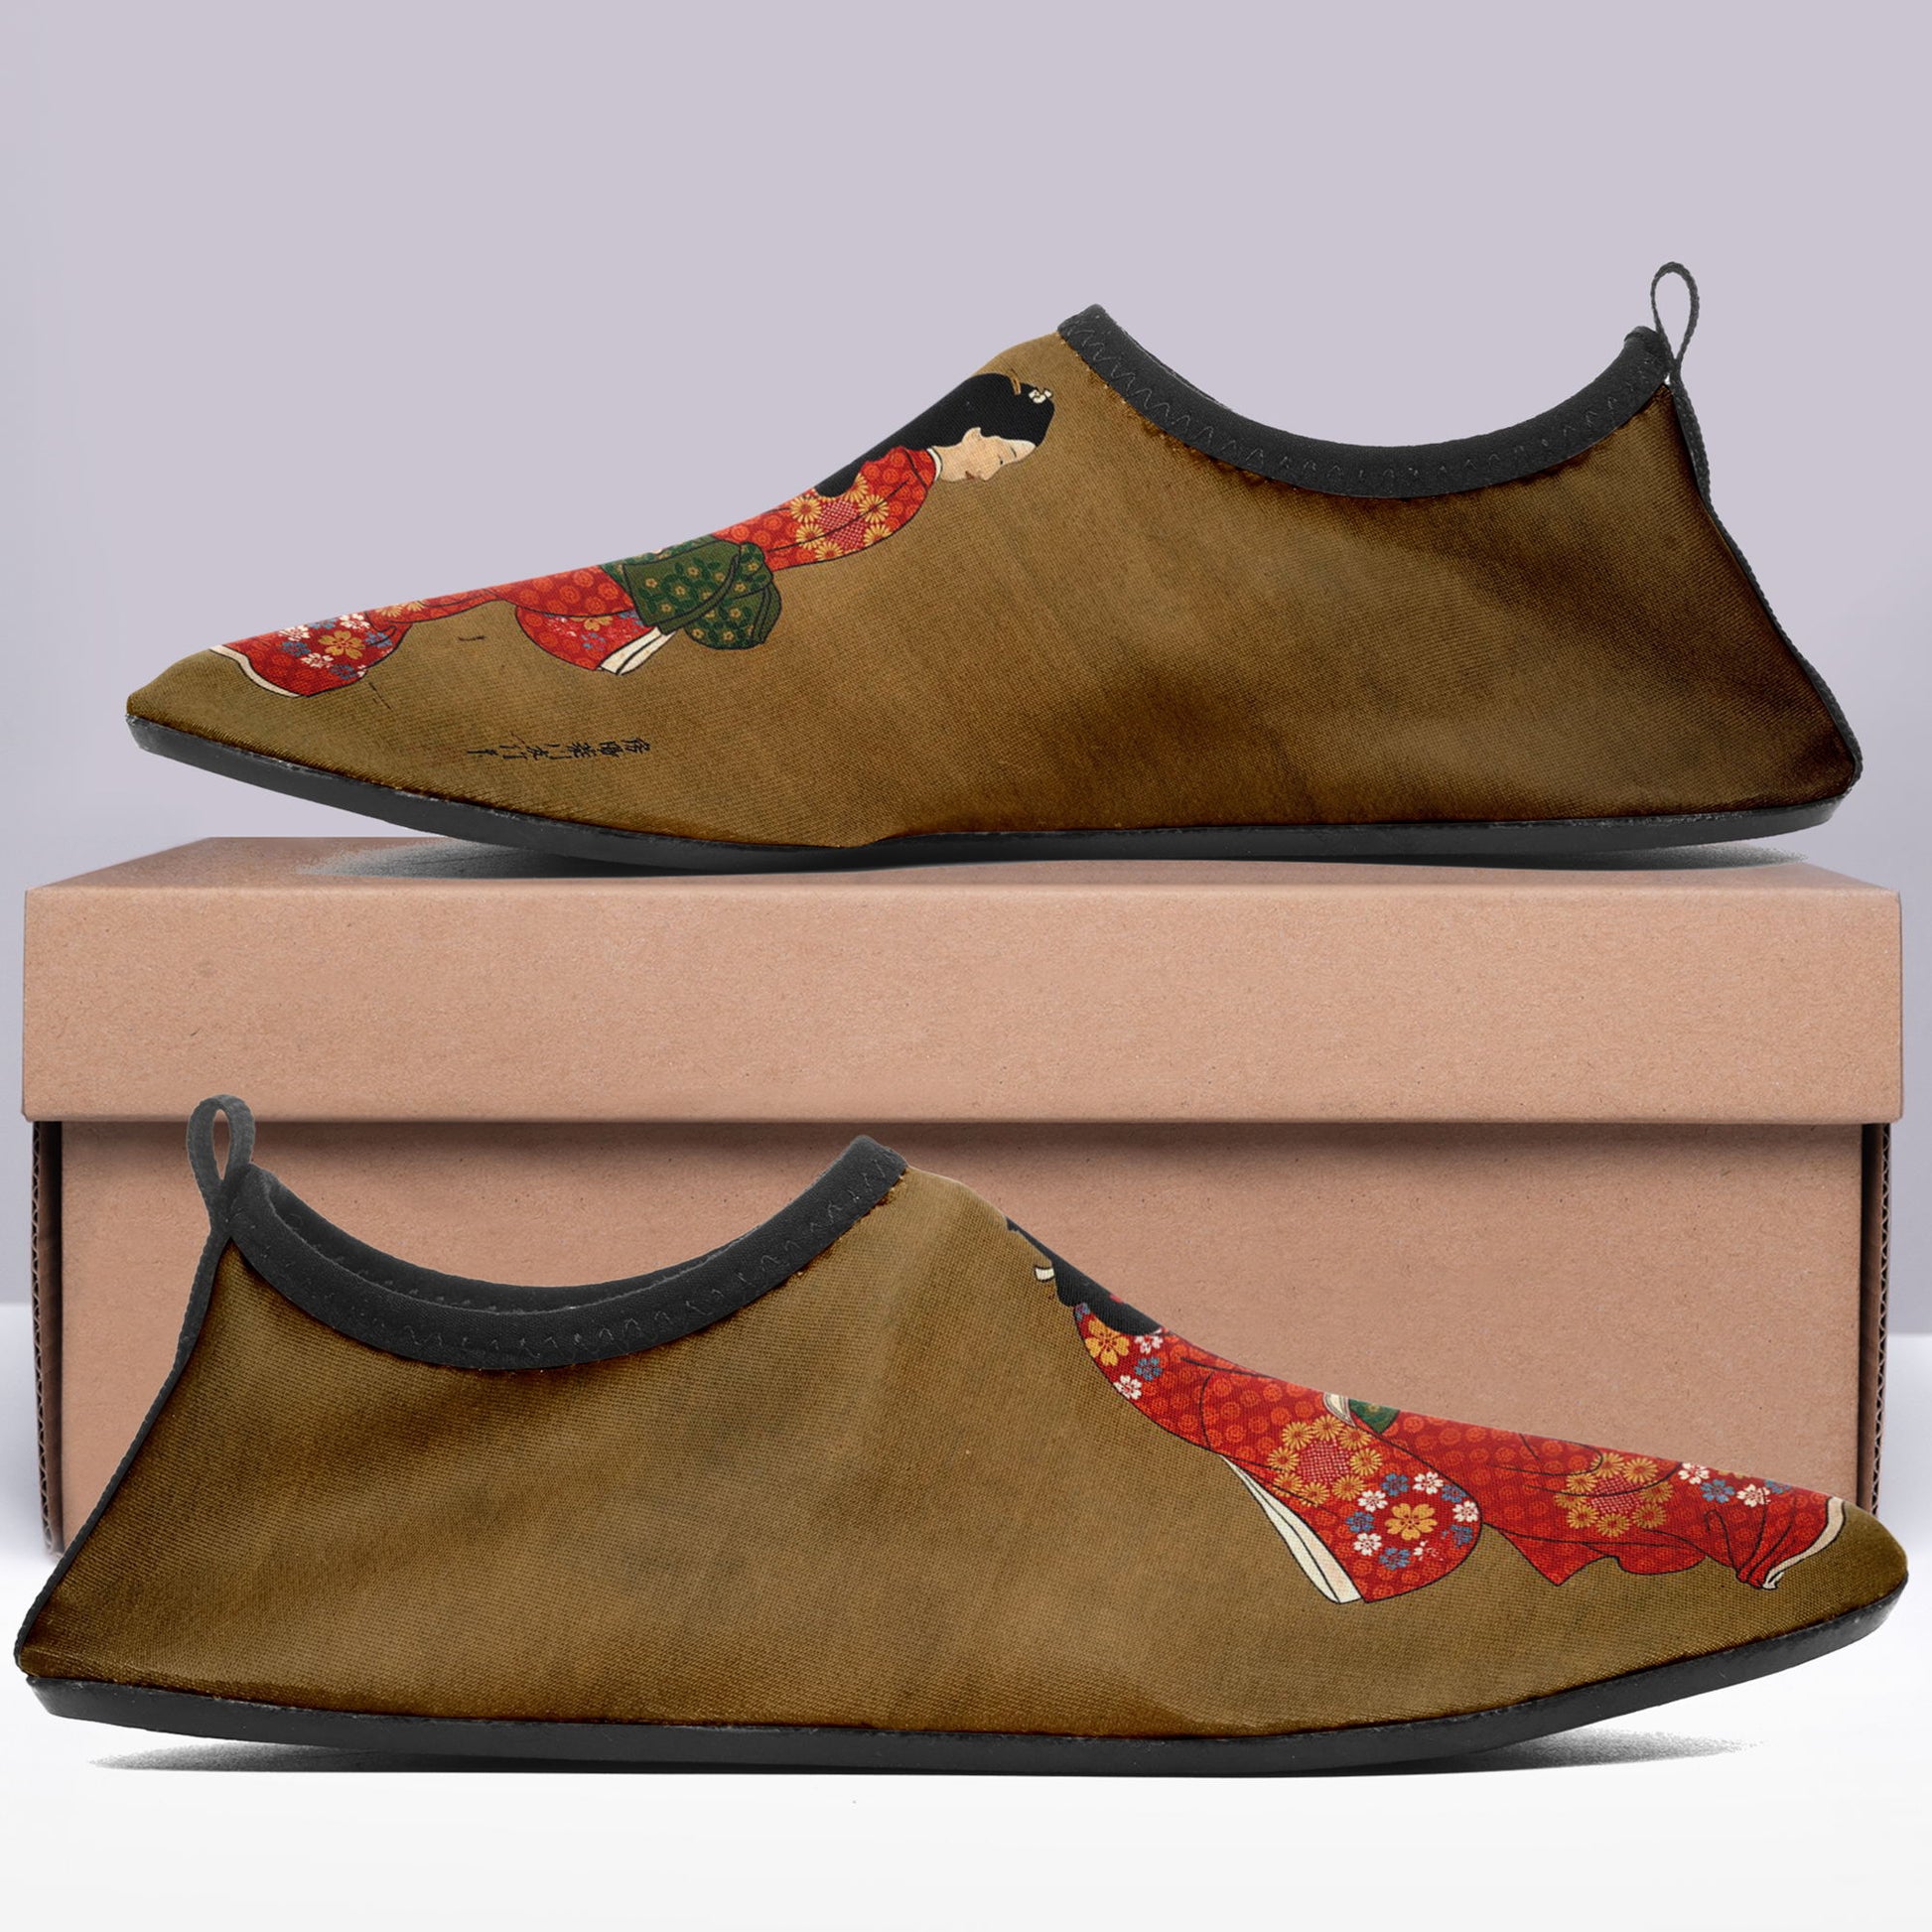 Custom Printed Aqua Shoes 1902: Ukiyo-e Hishikawa Moronobu's Beauty Looking Back Beach Wading Shoes custom logo brand name 7